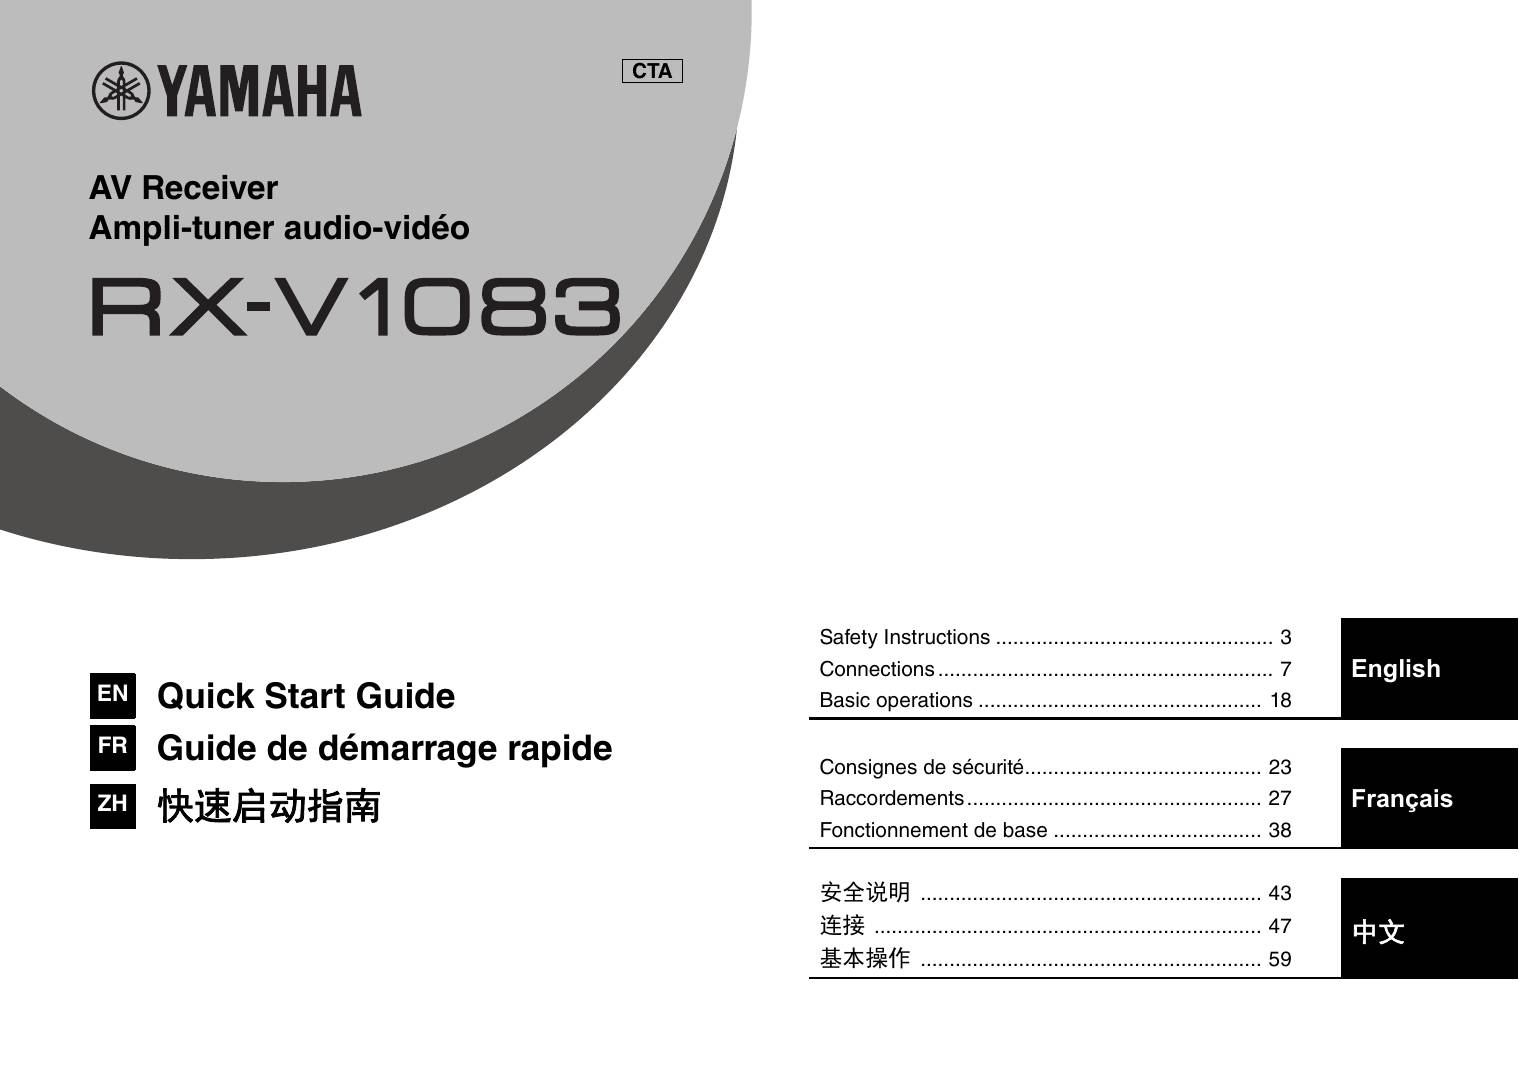 Yamaha RX-V3083